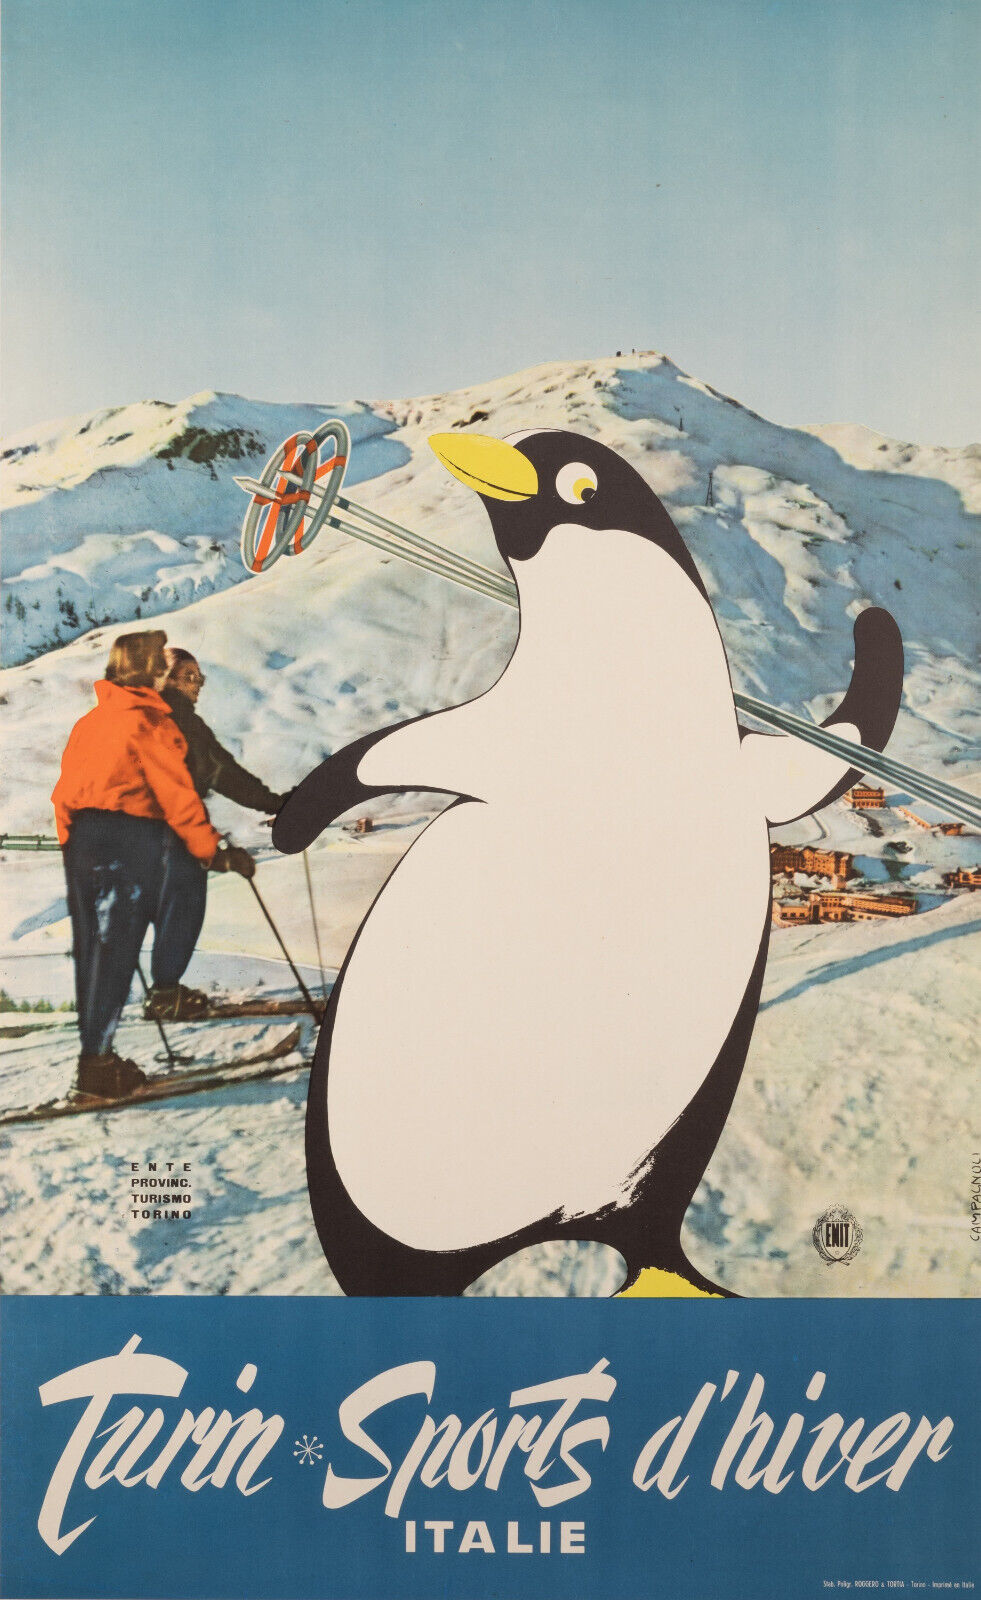 Original poster, Campagnoli, Turin Winter Sports, Italy, Piedmont, Ski, 1955